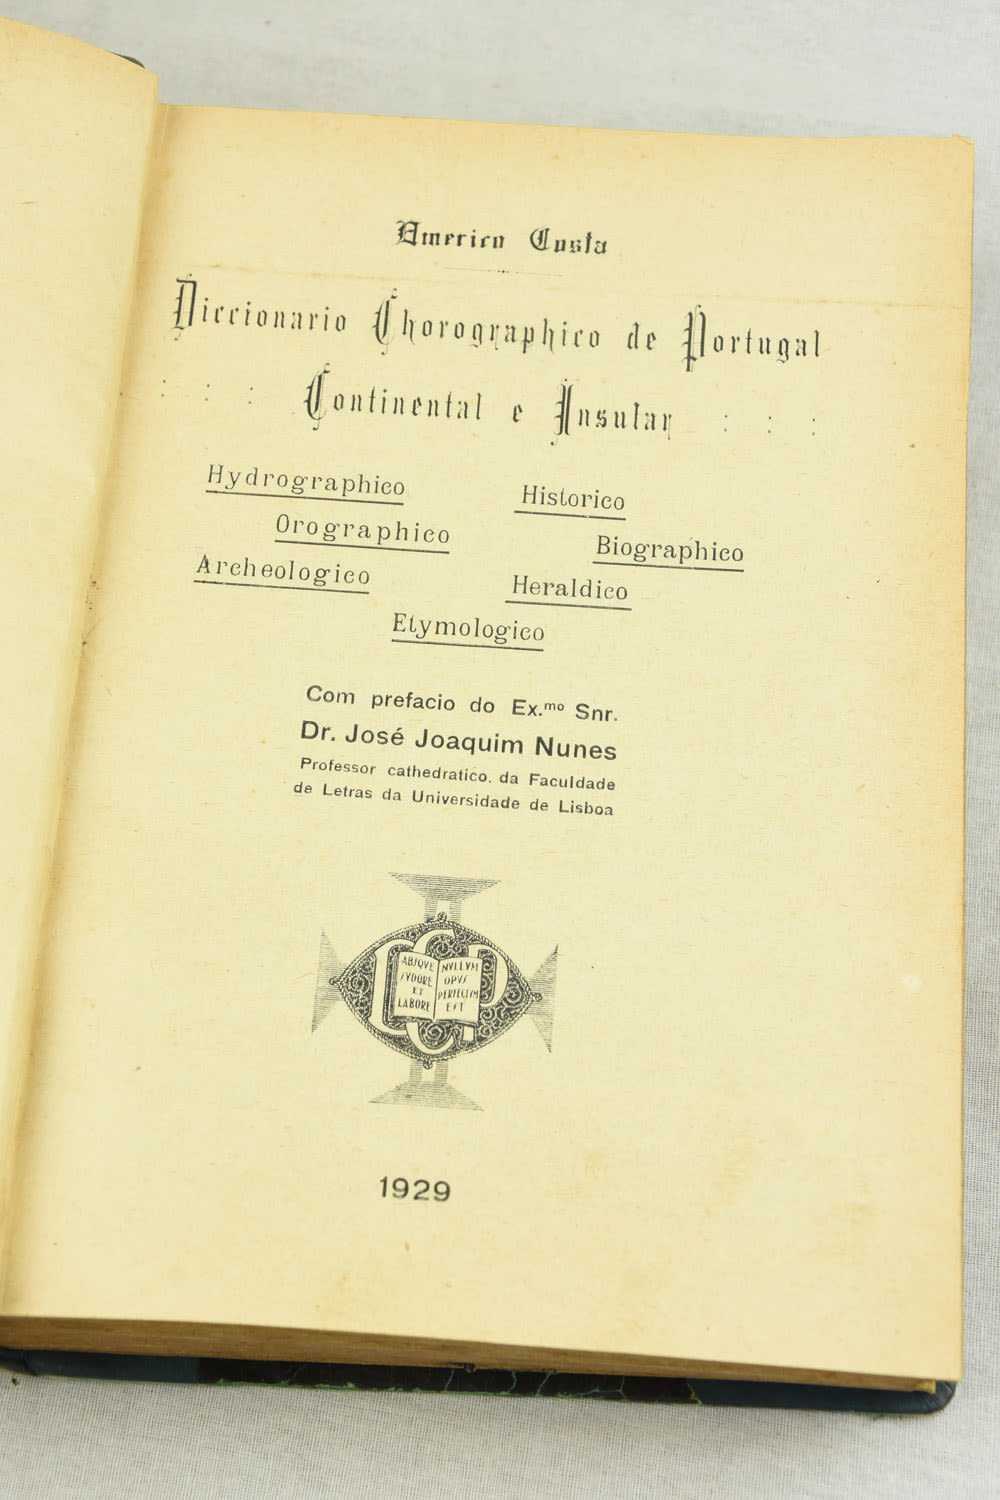 DICIONARIO COROGRAFICO DE PORTUGAL CONTINENTAL E INSULAR - 11 vol.